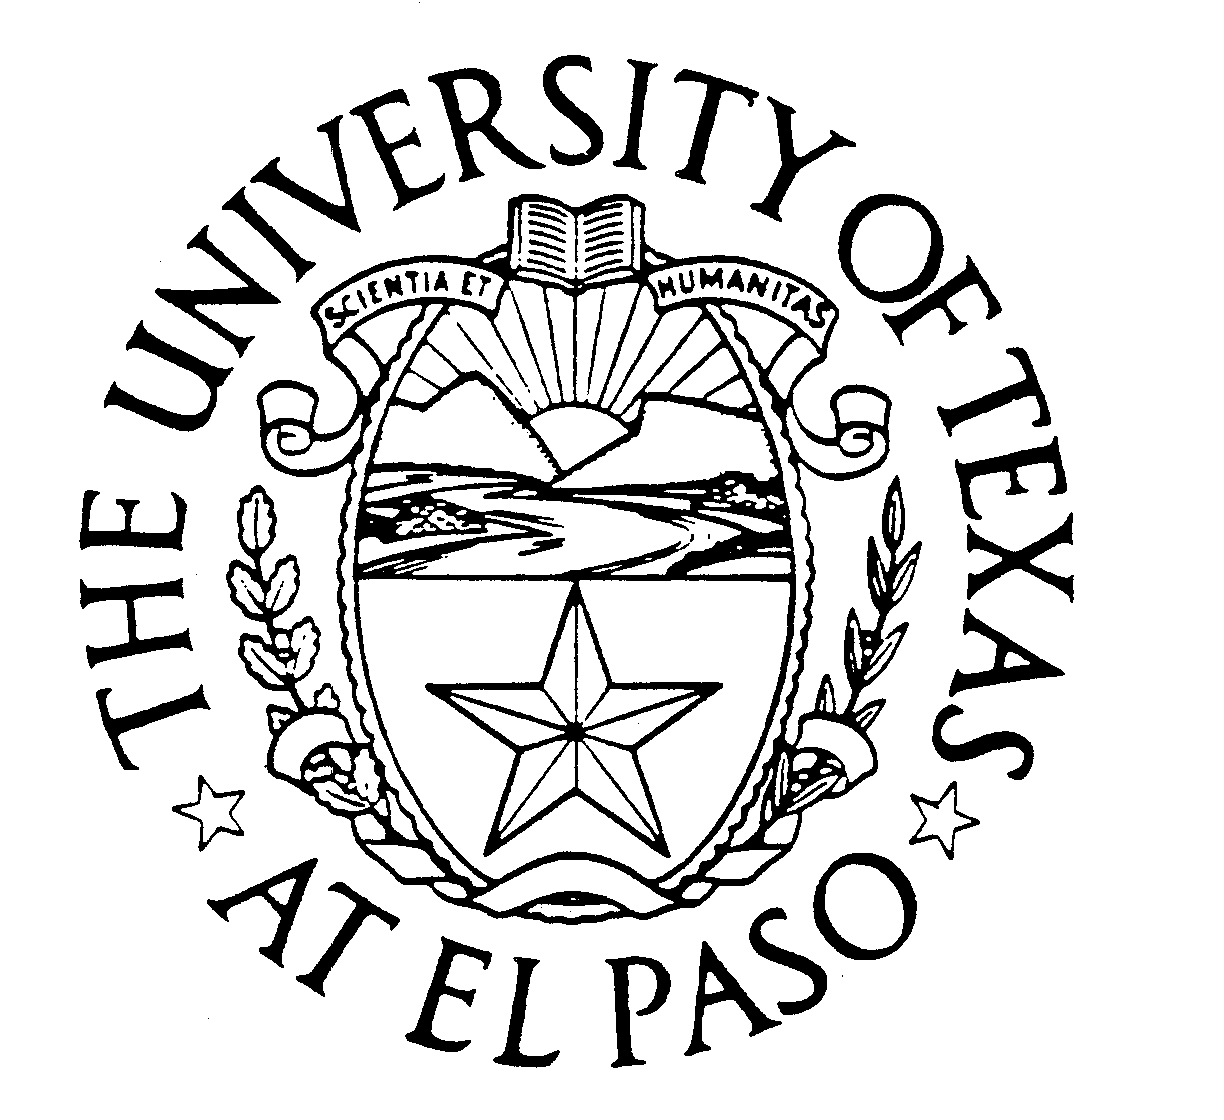 THE UNIVERSITY OF TEXAS AT EL PASO SCIENTIA ET HUMANITAS